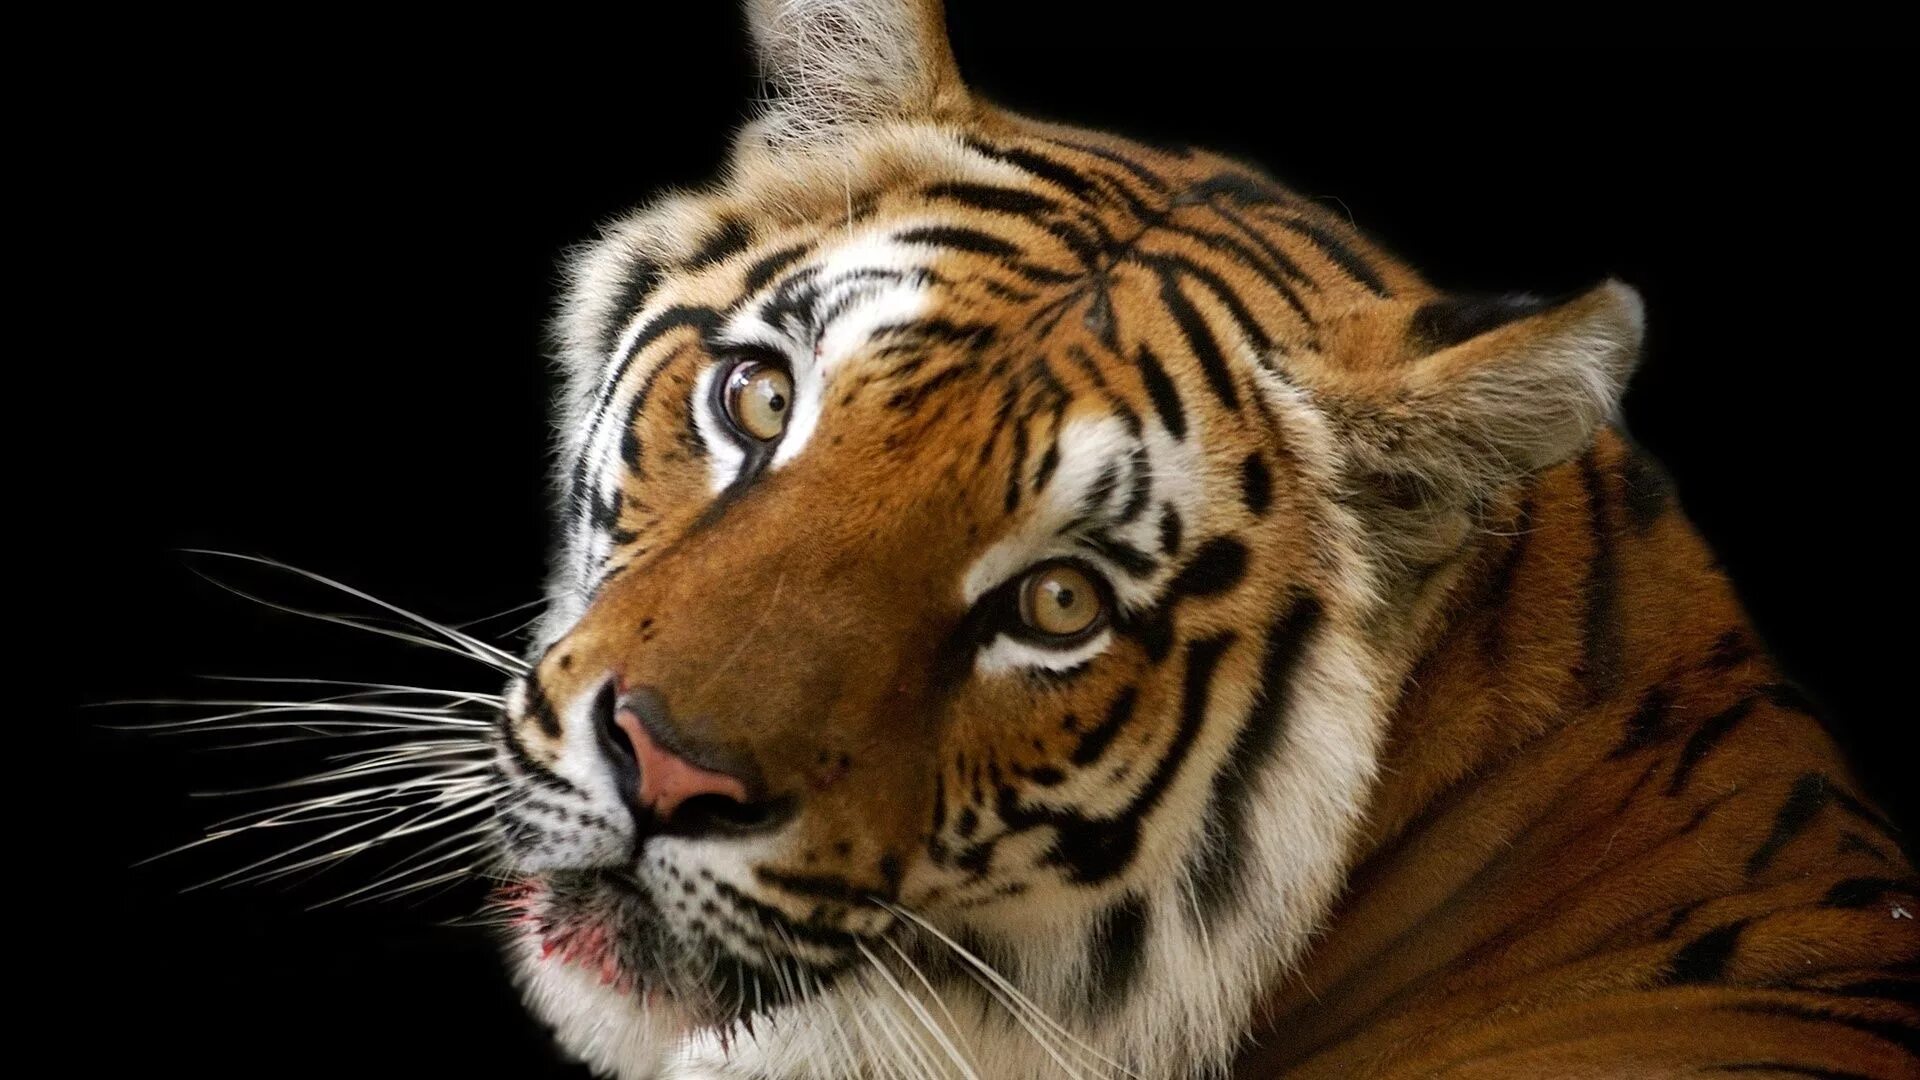 Заставки на телефон тиграми бесплатные. Тайгер тигр. Красивый тигр. Тигр морда. Тигр на заставку.